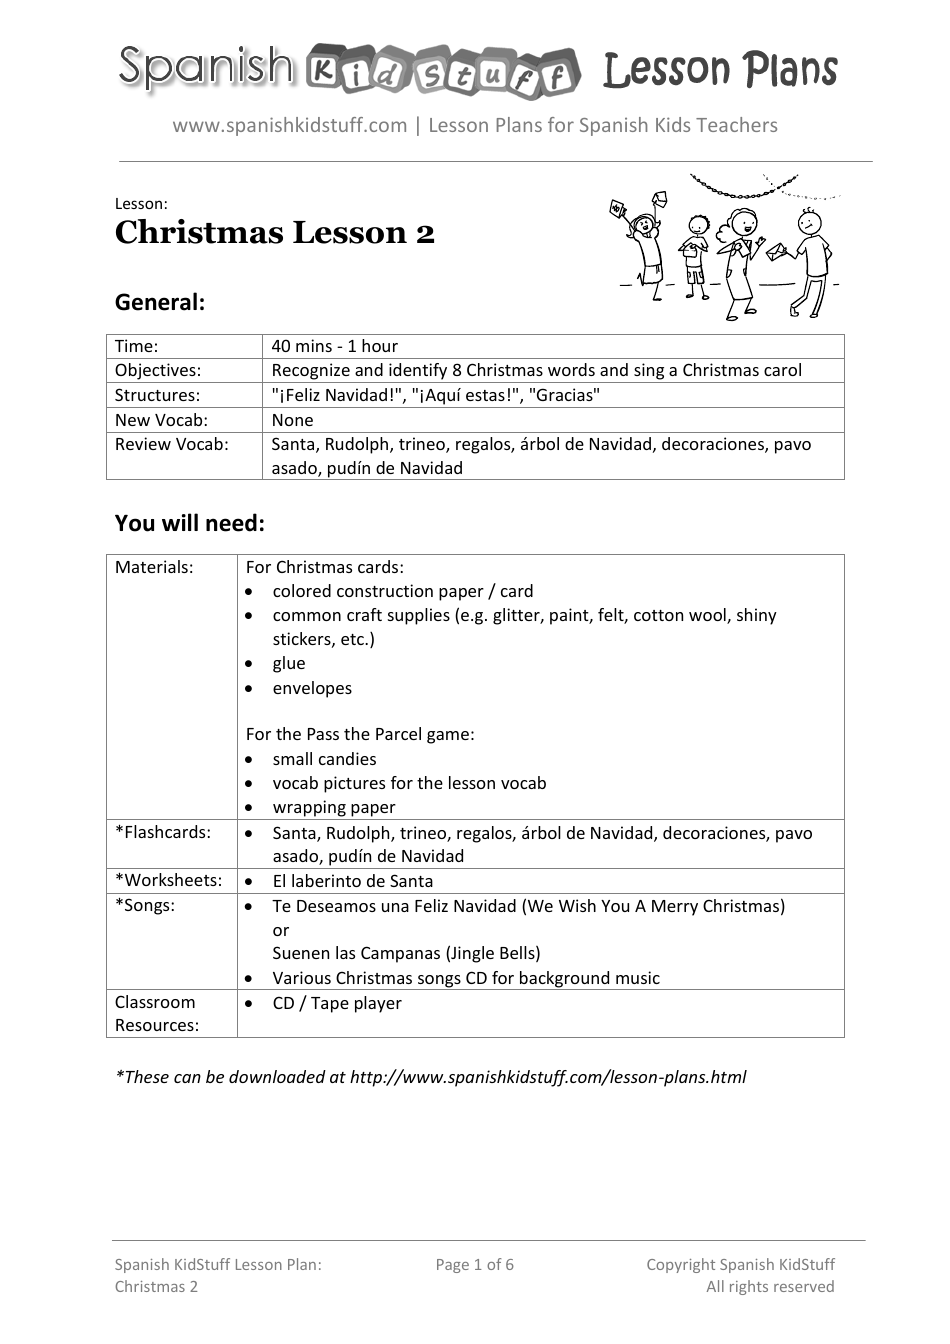 Spanish Lesson Plan: Christmas Lesson - Spanish Kidstuff, Page 1